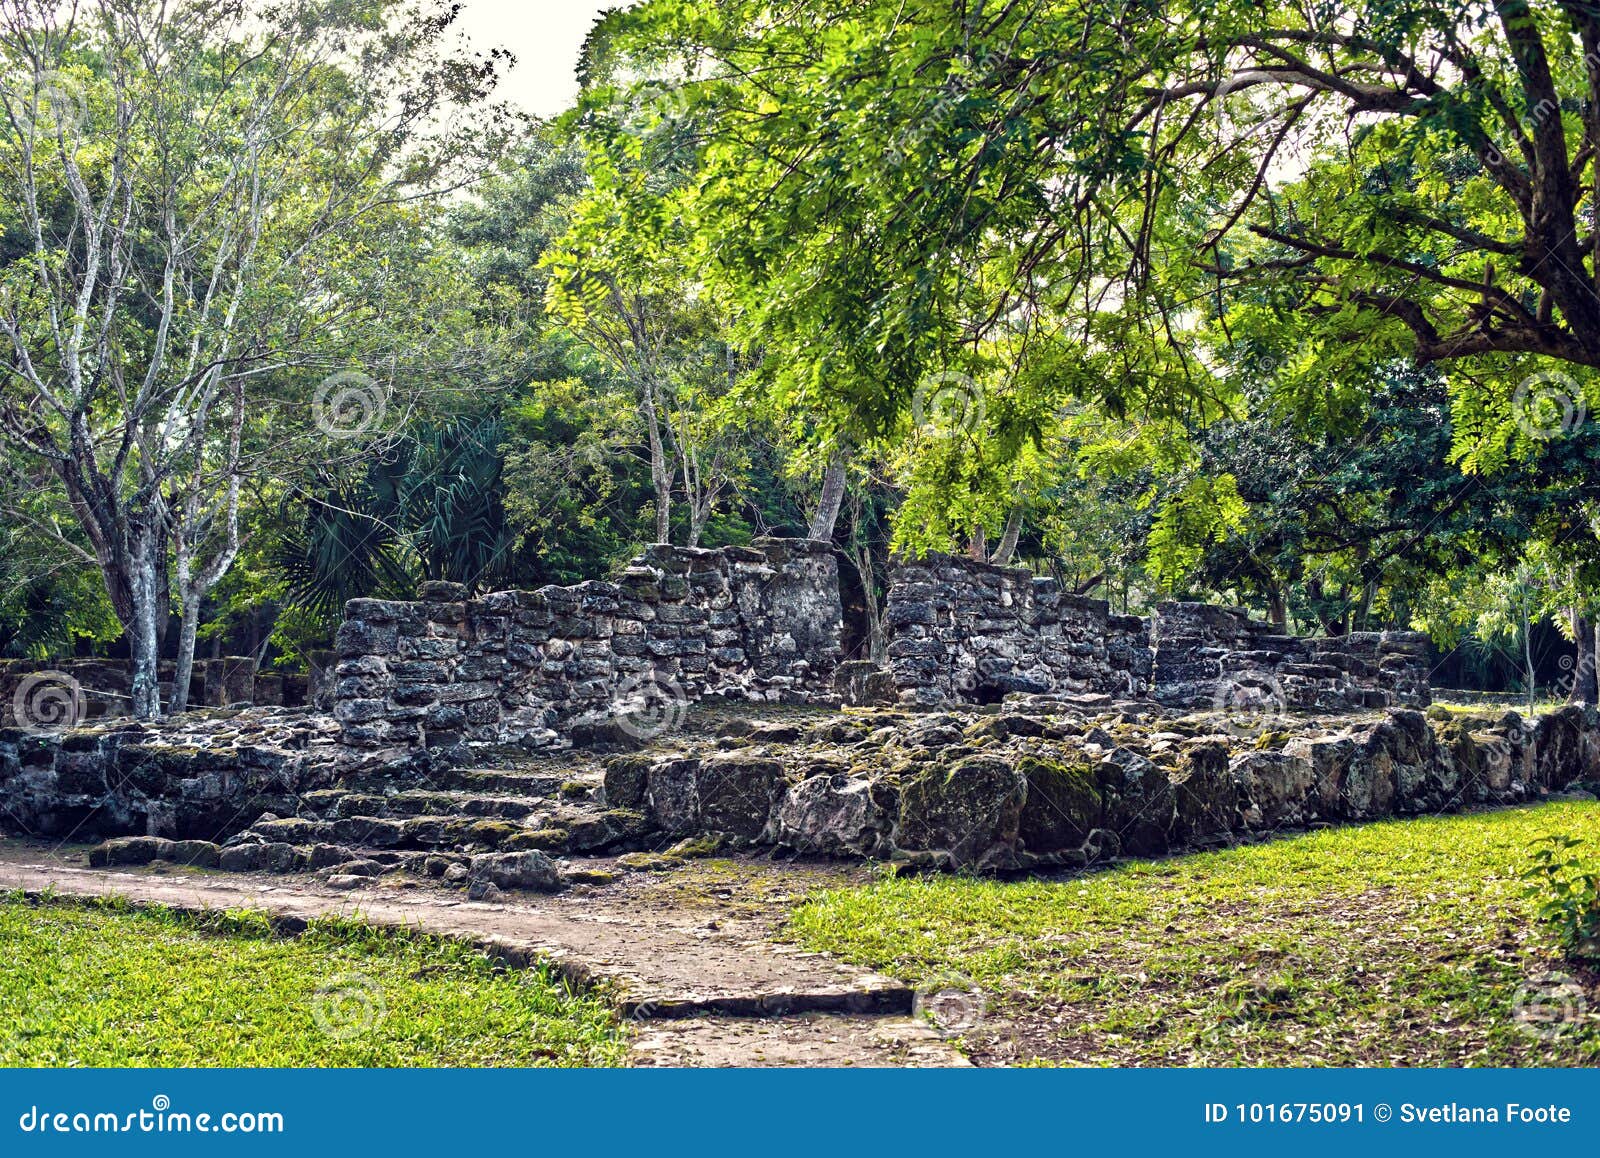 mayan ruins in san gervasio